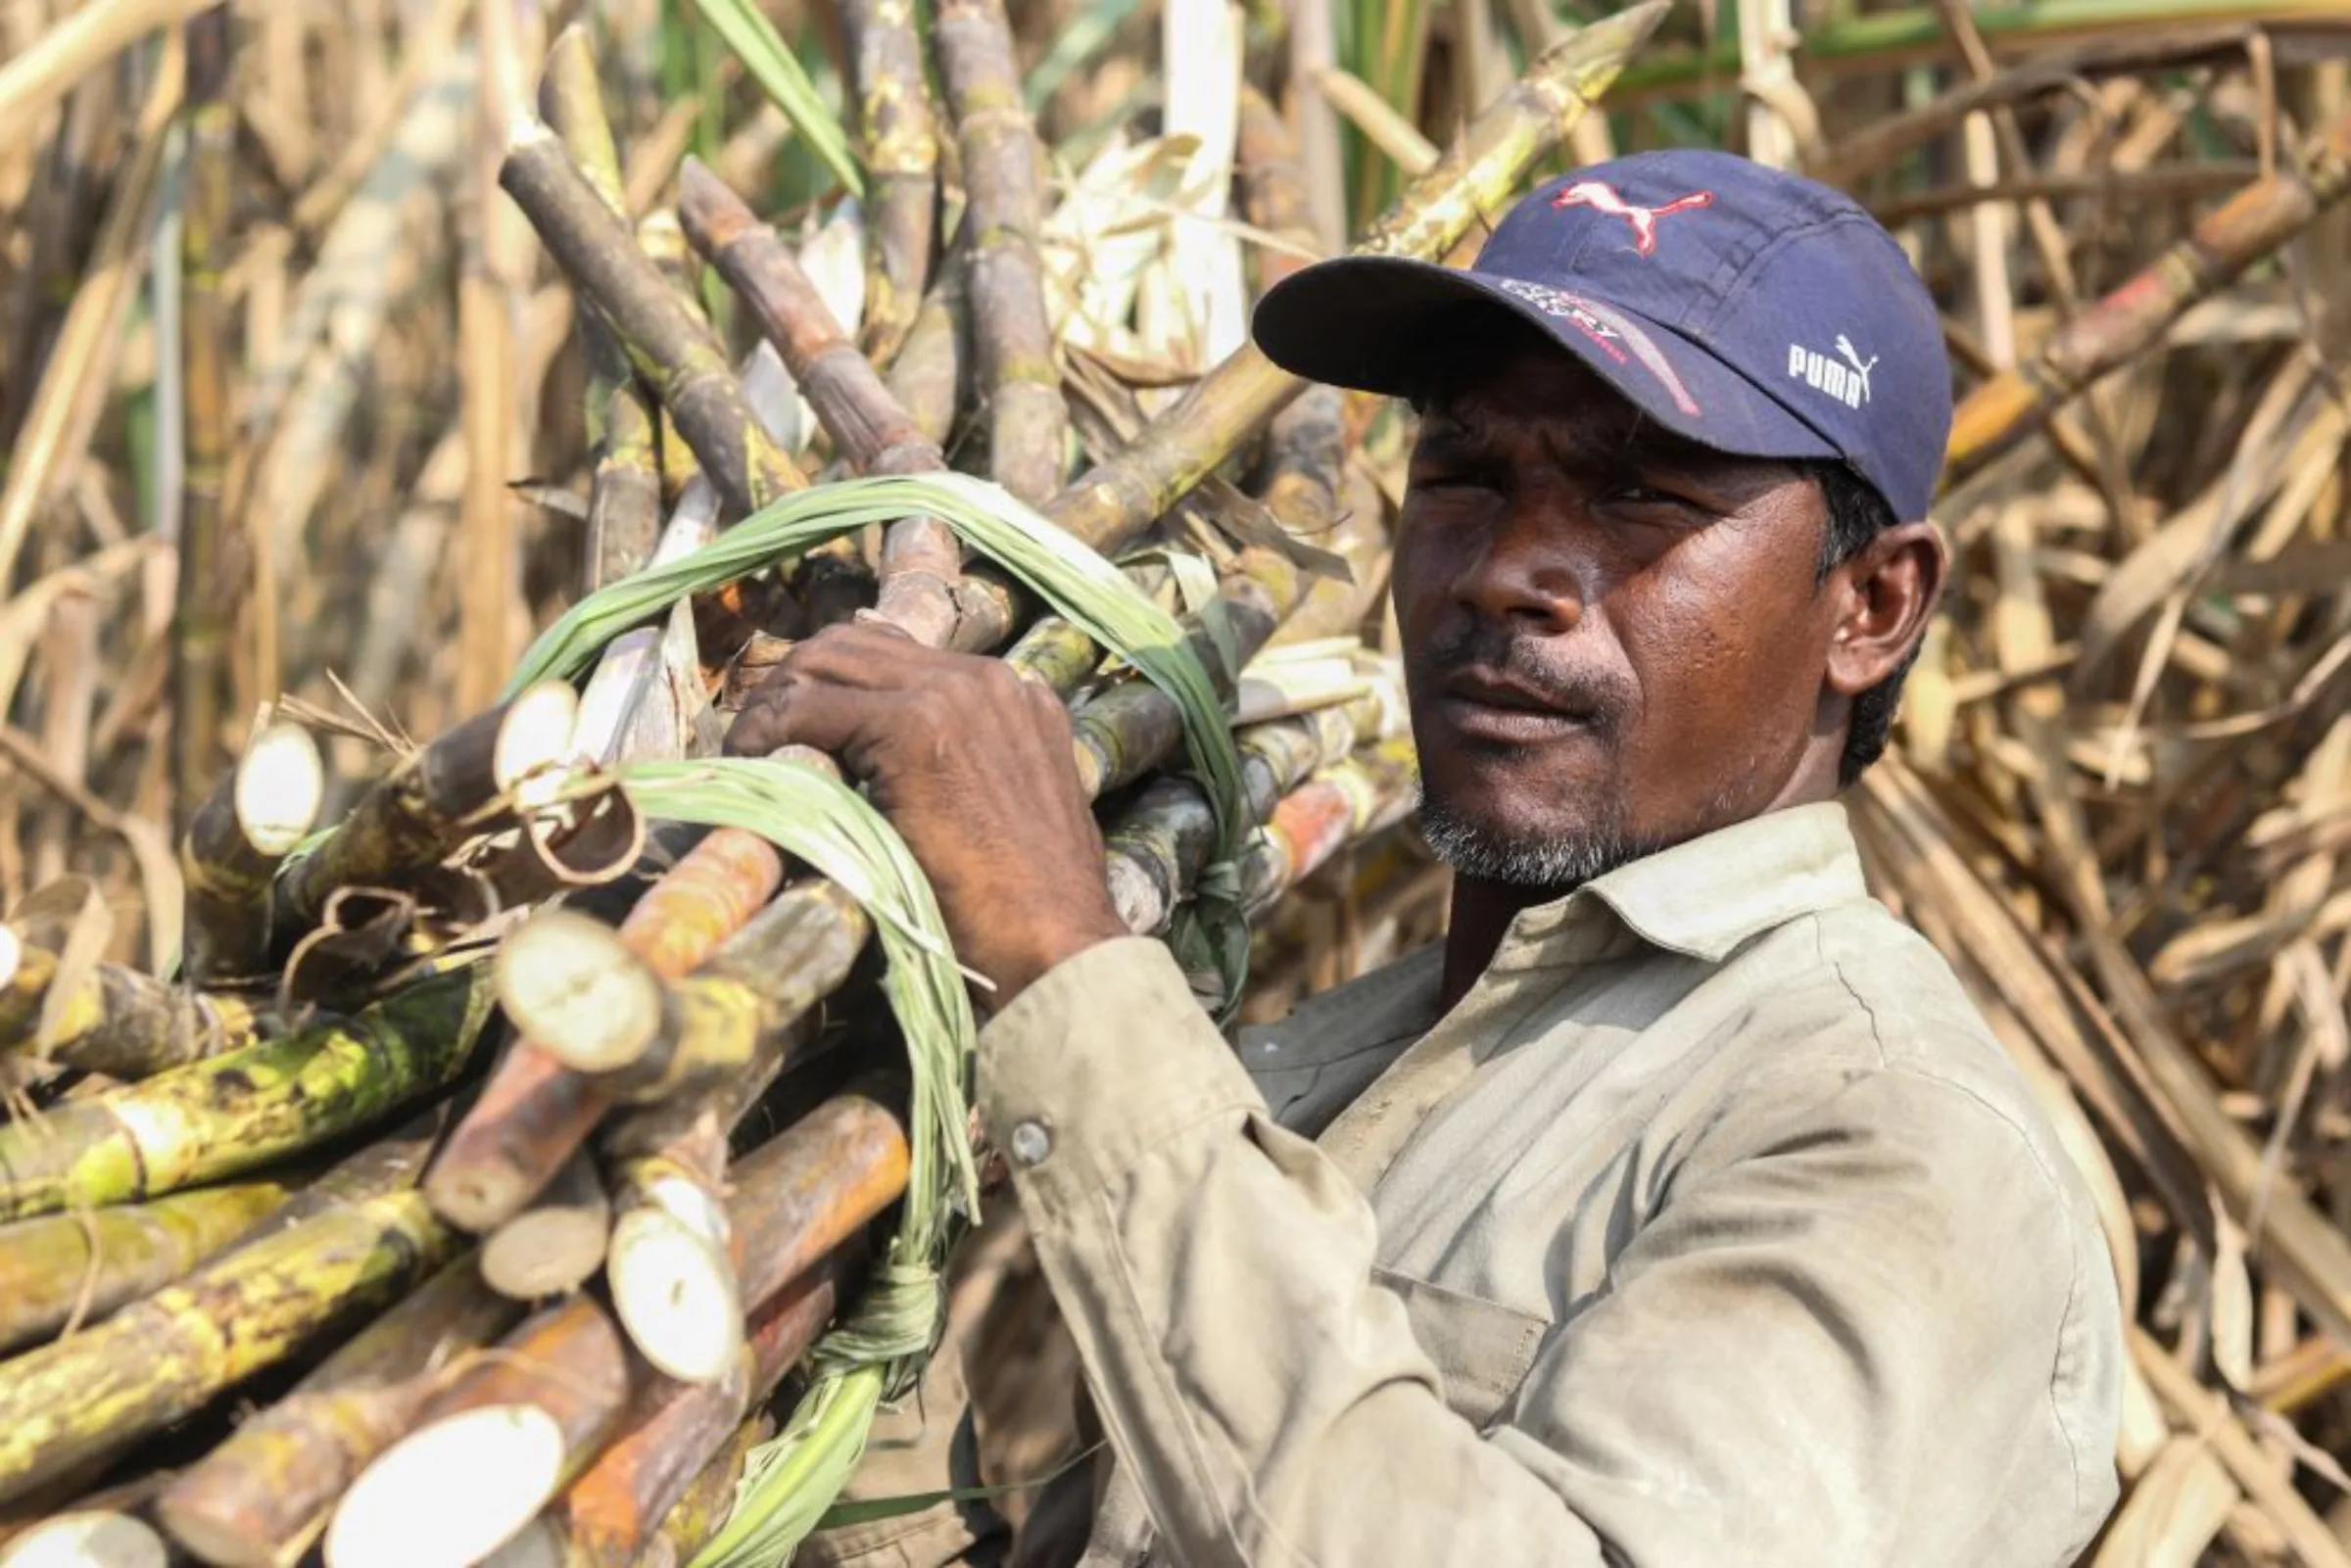 Dagdu Bhil carries sugarcanes he had just cut at a sugarcane farm in Maharashtra’s Khochi village, India. December 17, 2022